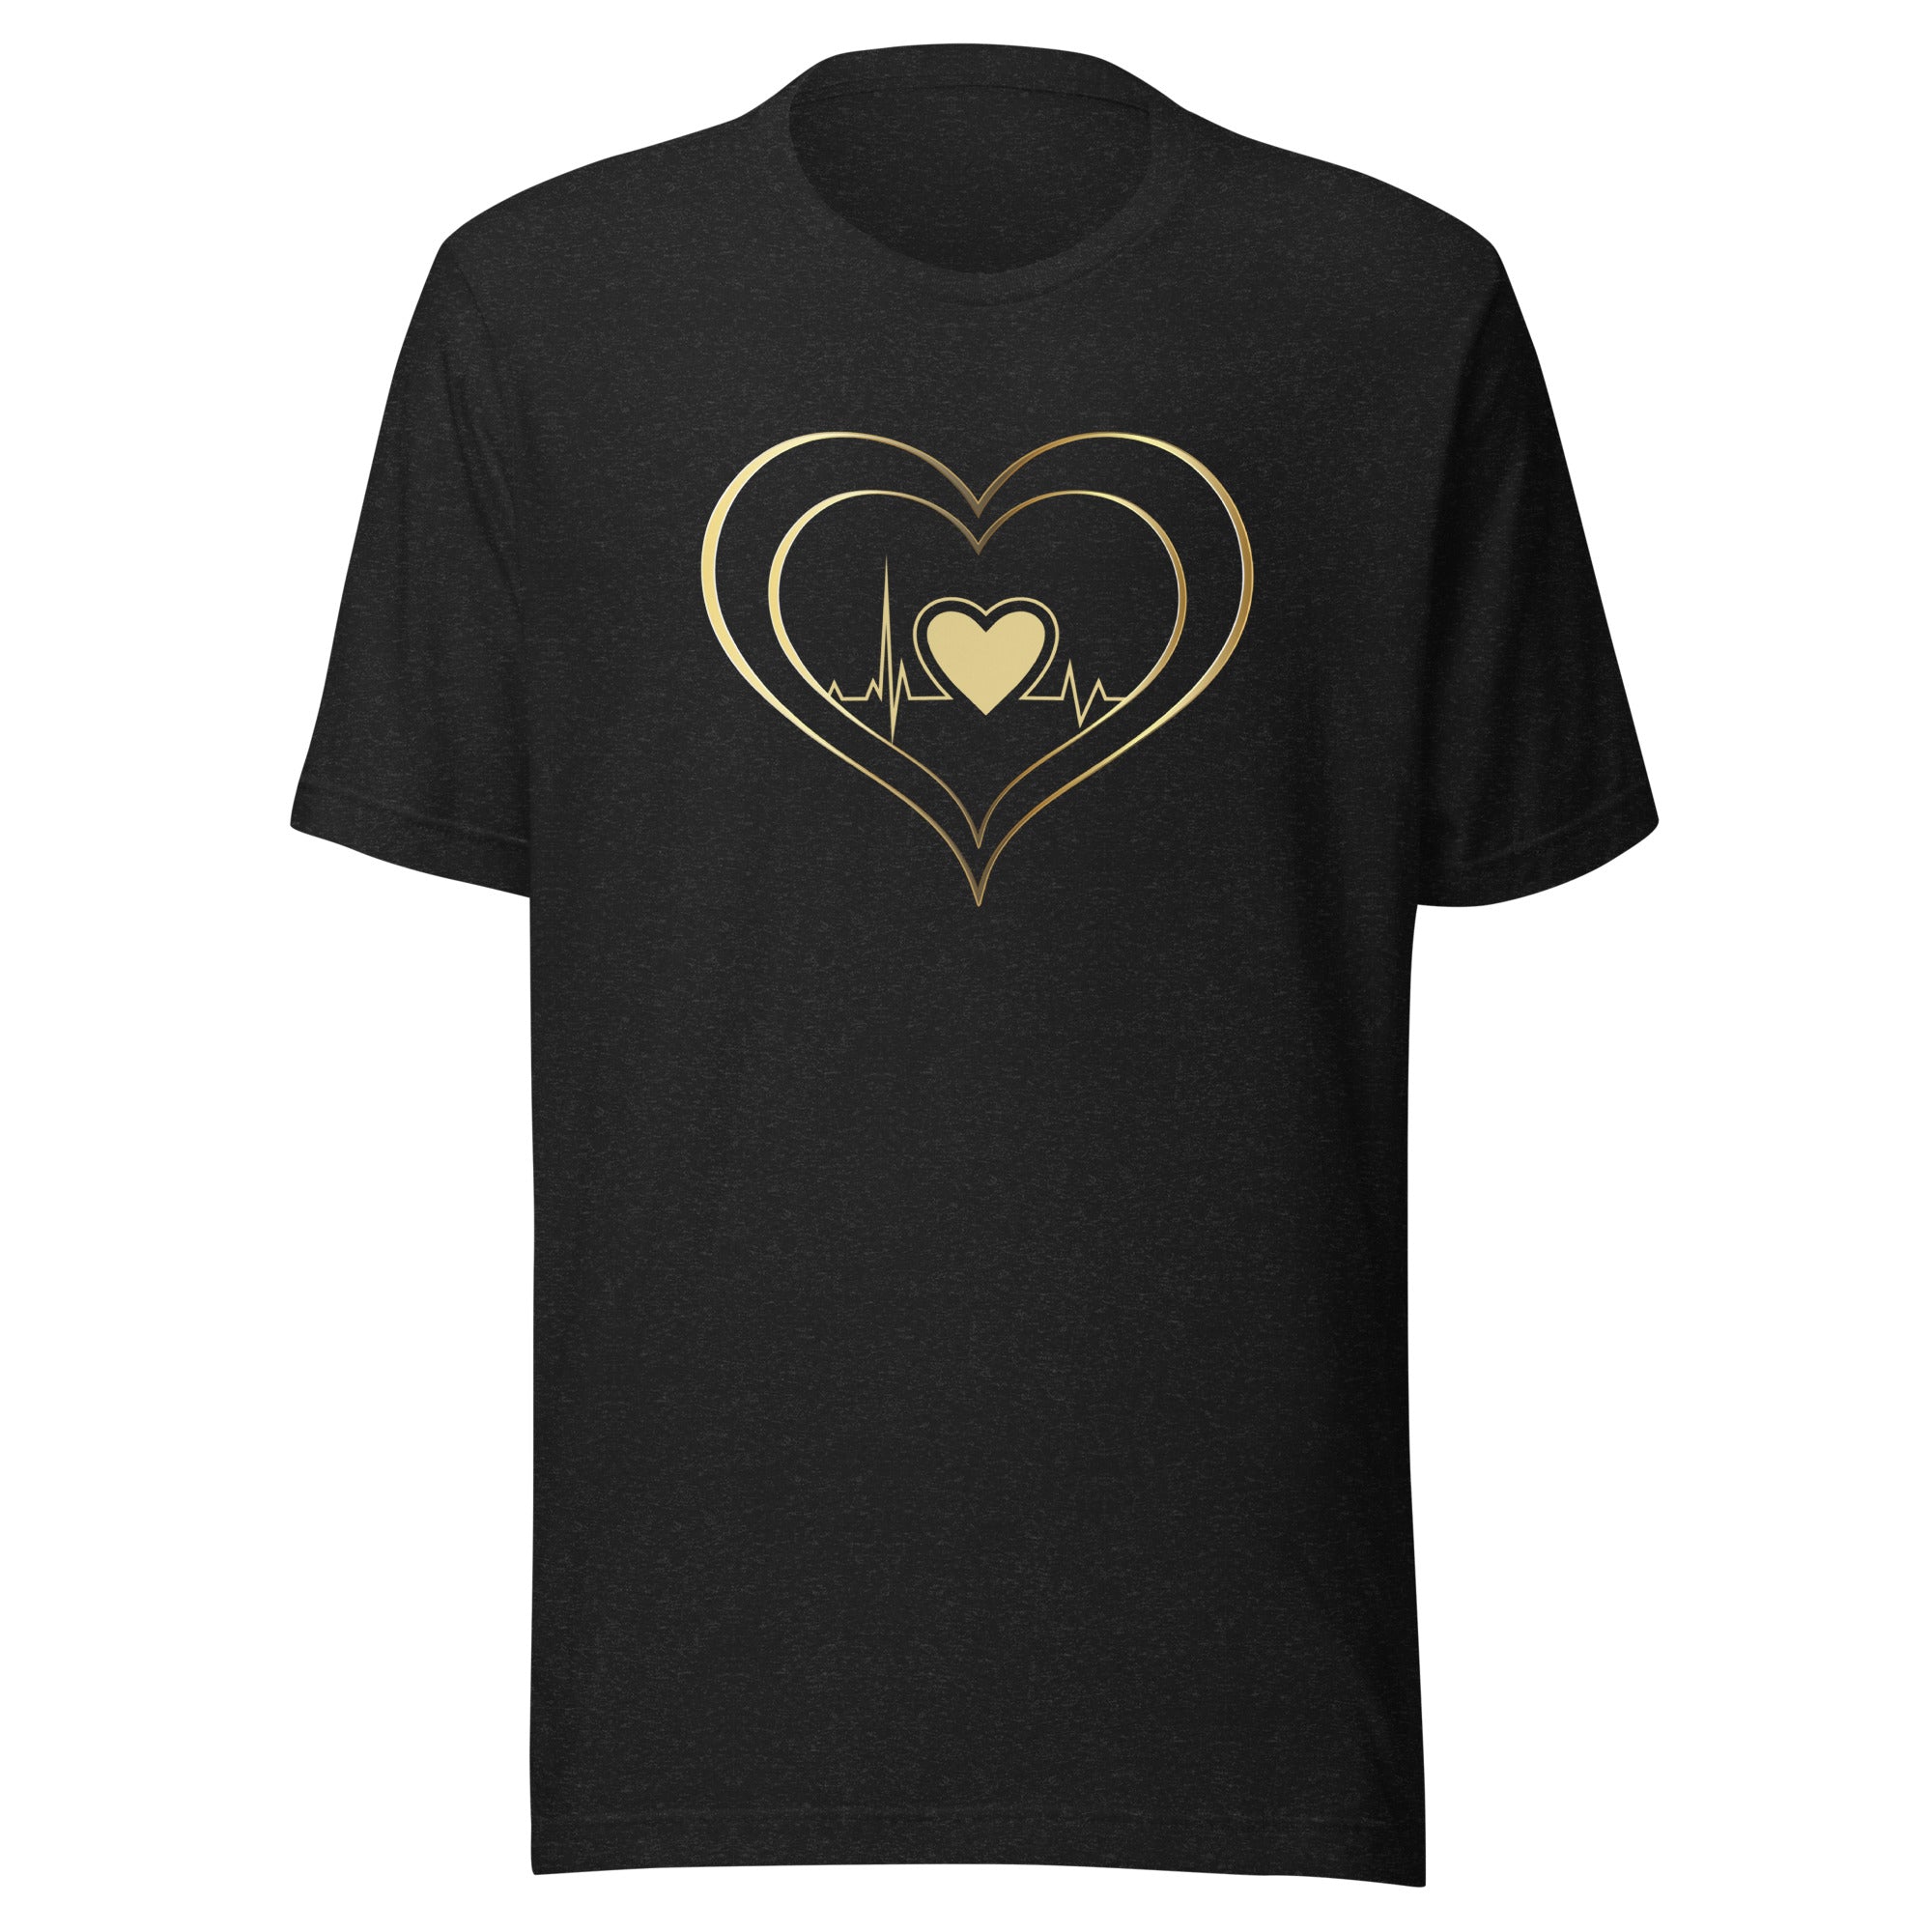 Heartful Threads Unisex t-shirt